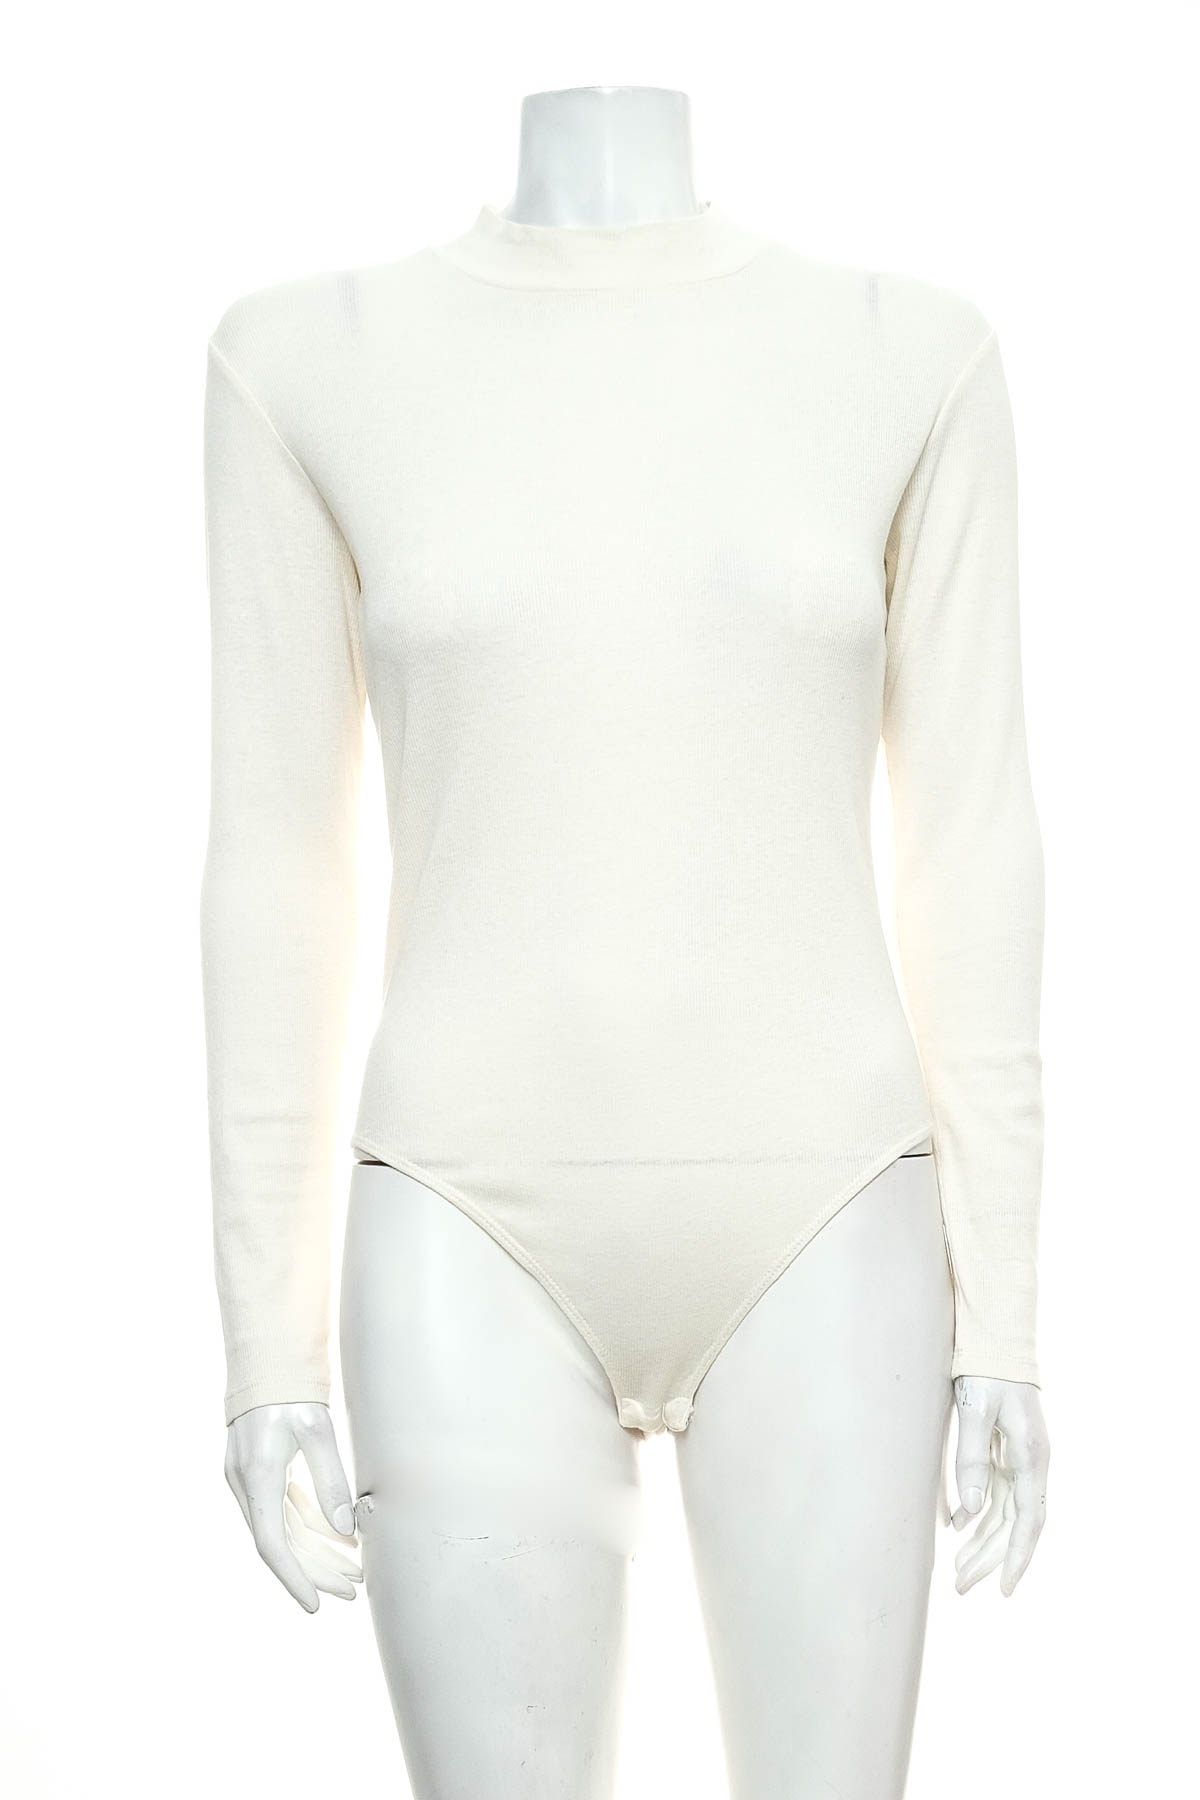 Woman's bodysuit - H&M - 0